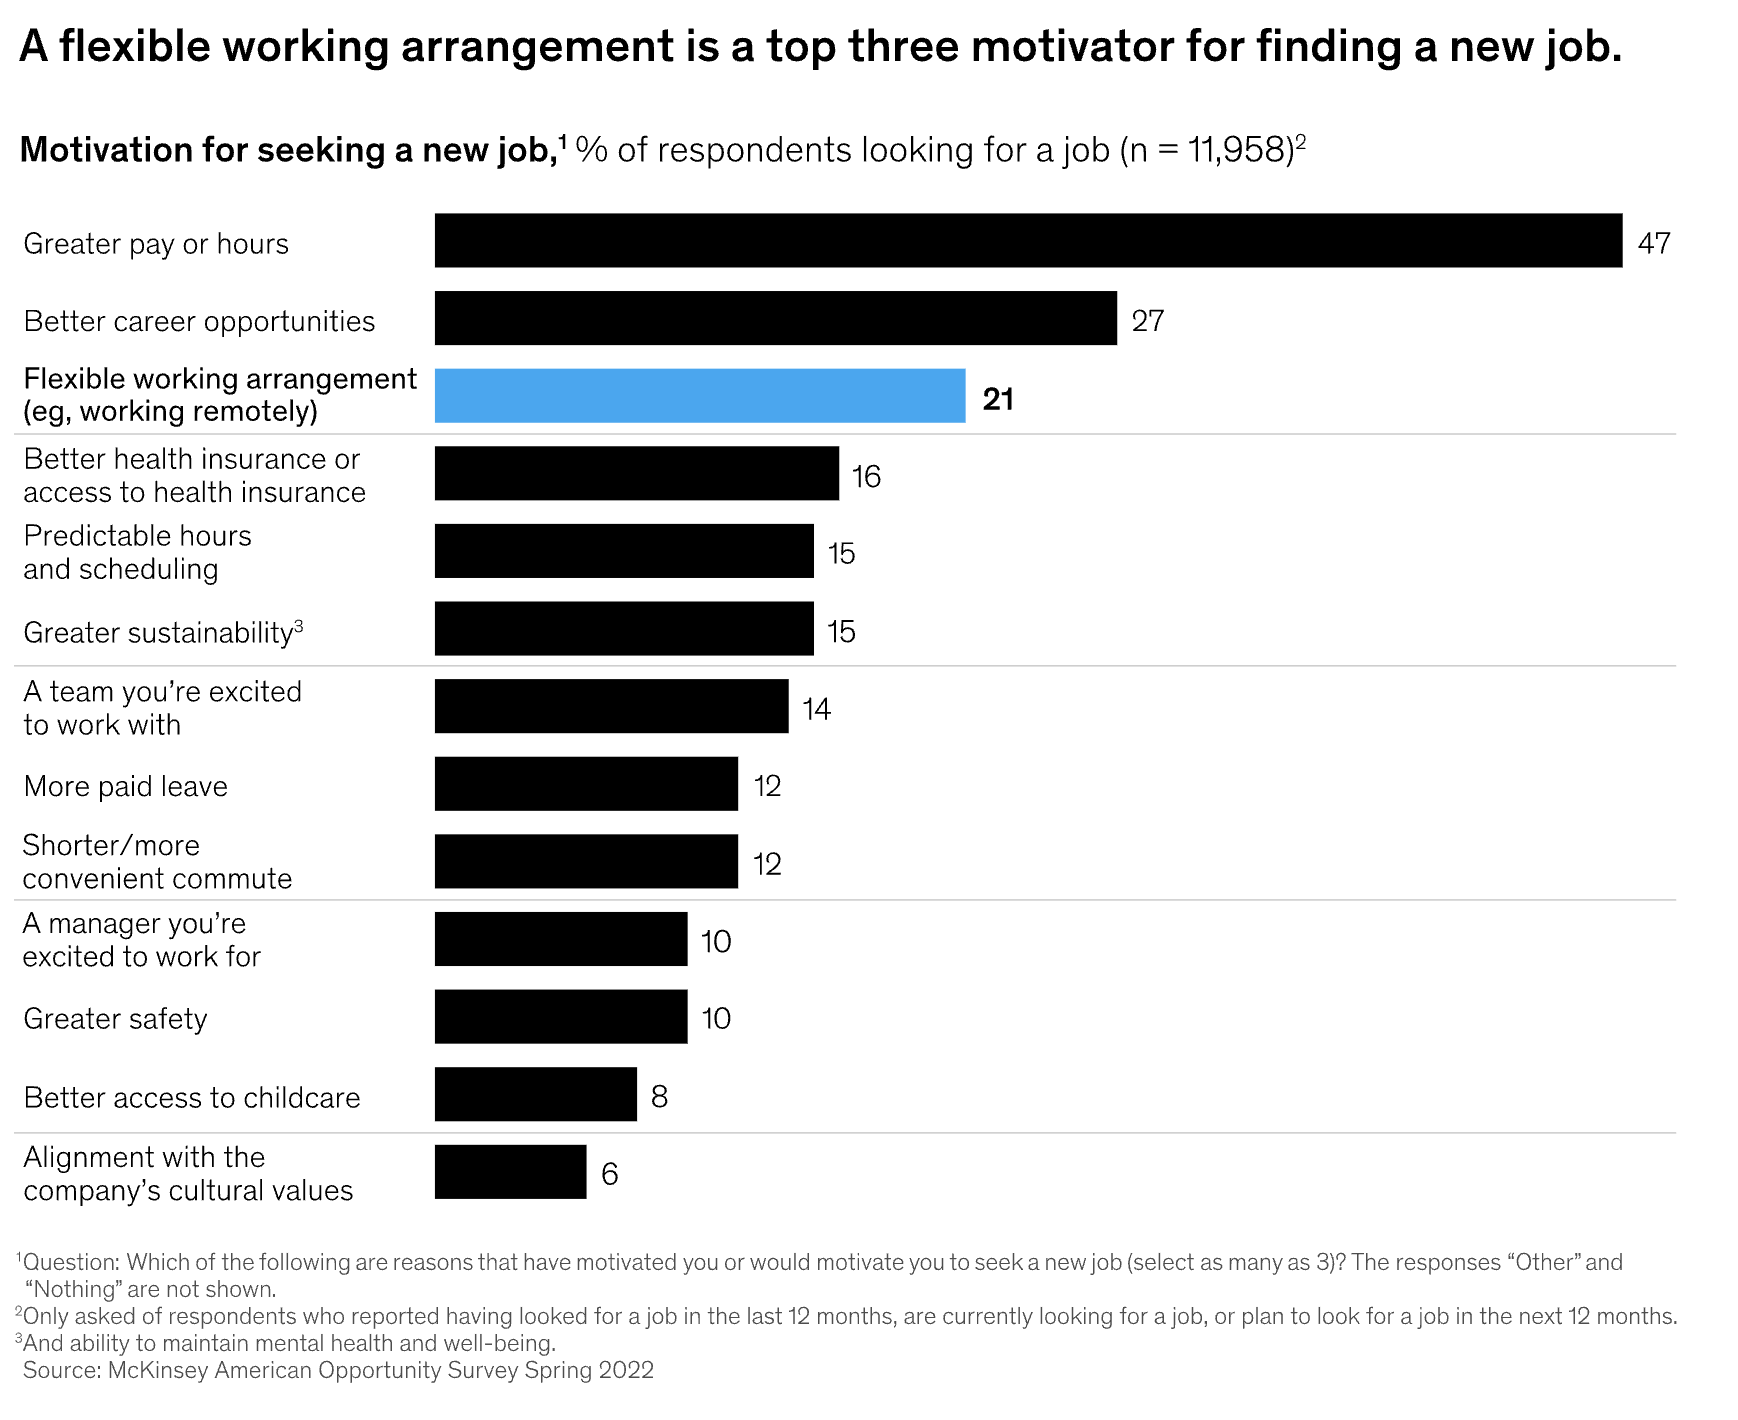 A flexible working arrangement is a top three motivator for finding a new job